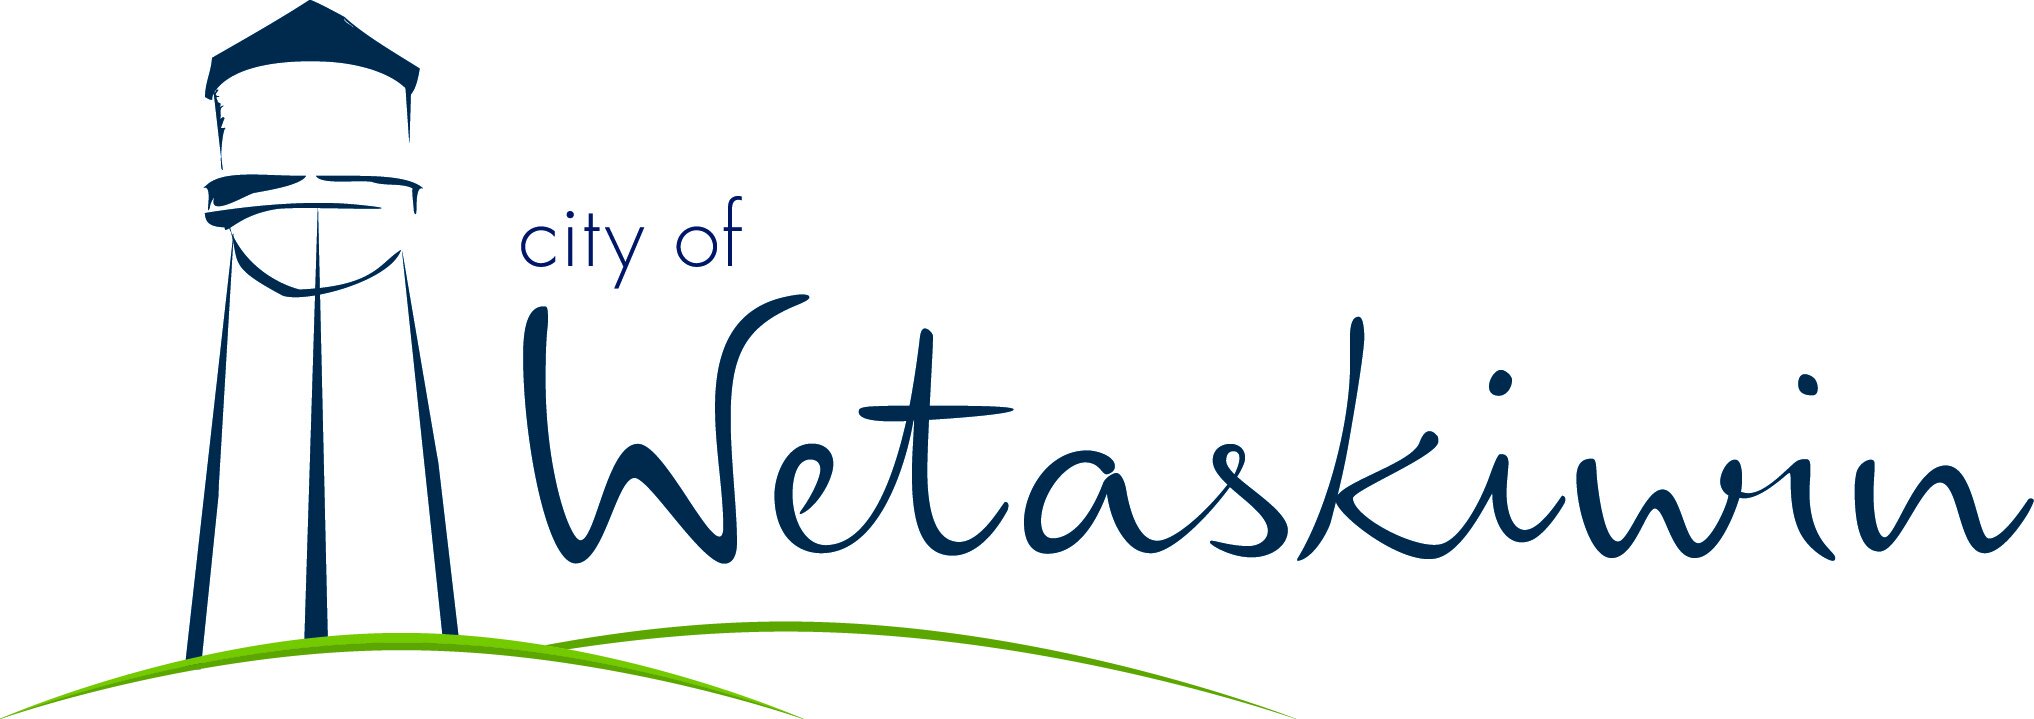 City-of-Wetaskiwin-Logo.jpg